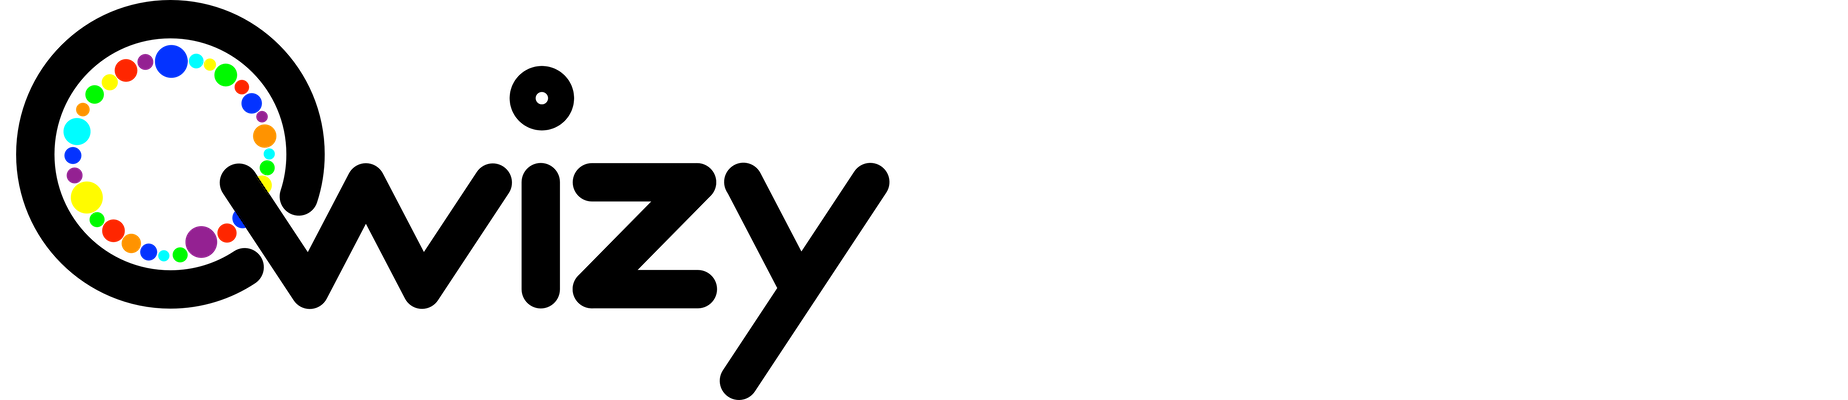 Qwizy logo